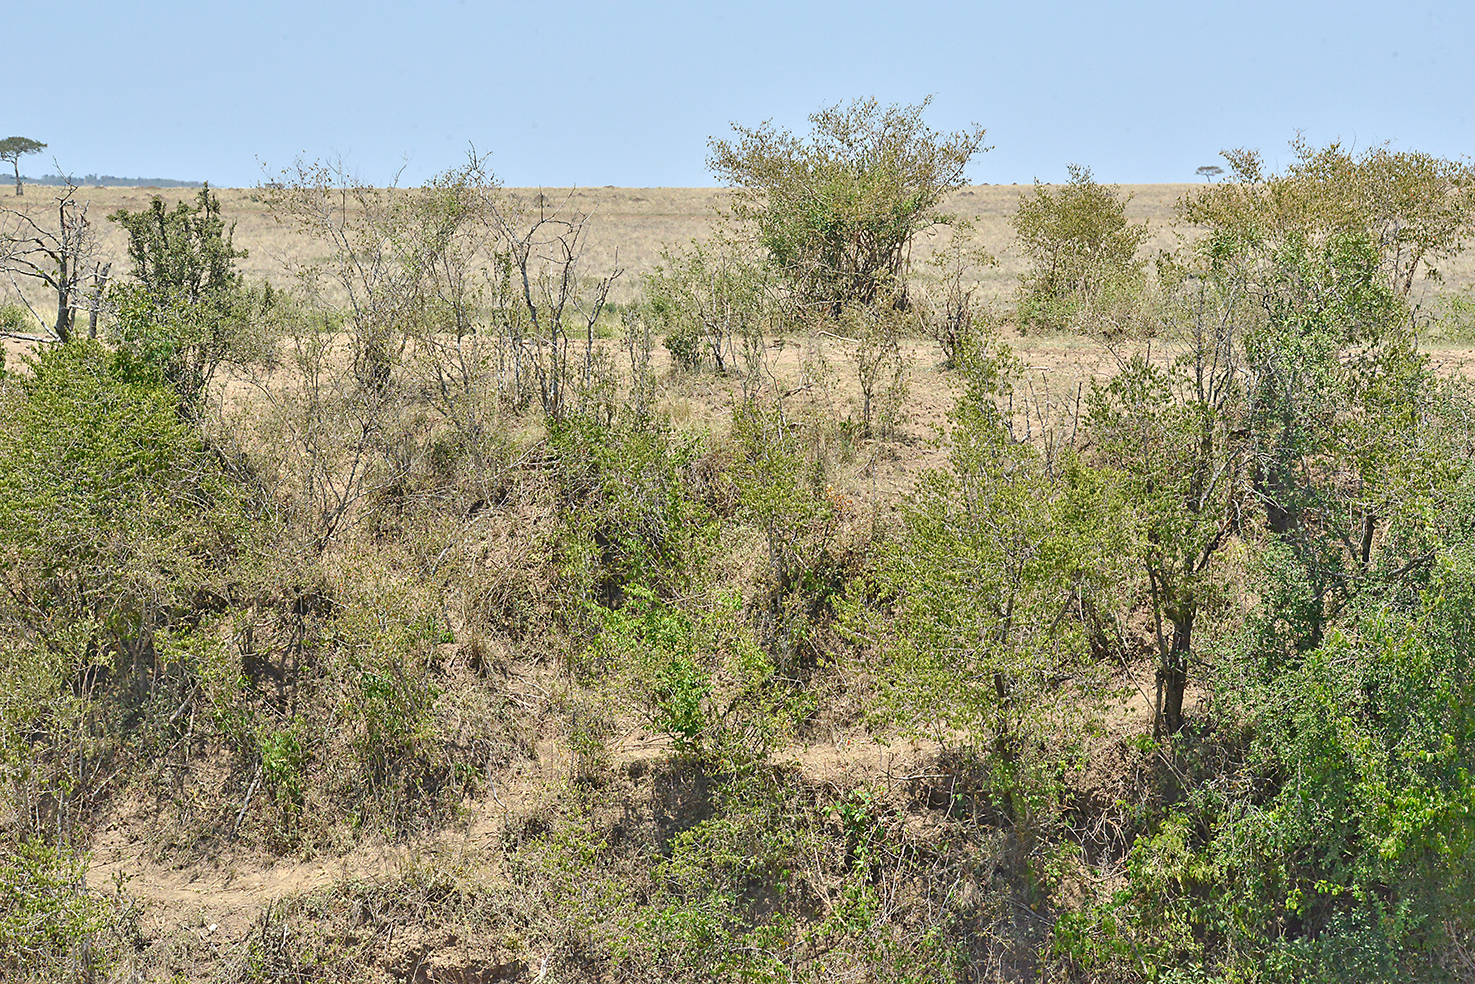 005 Masai Mara 2